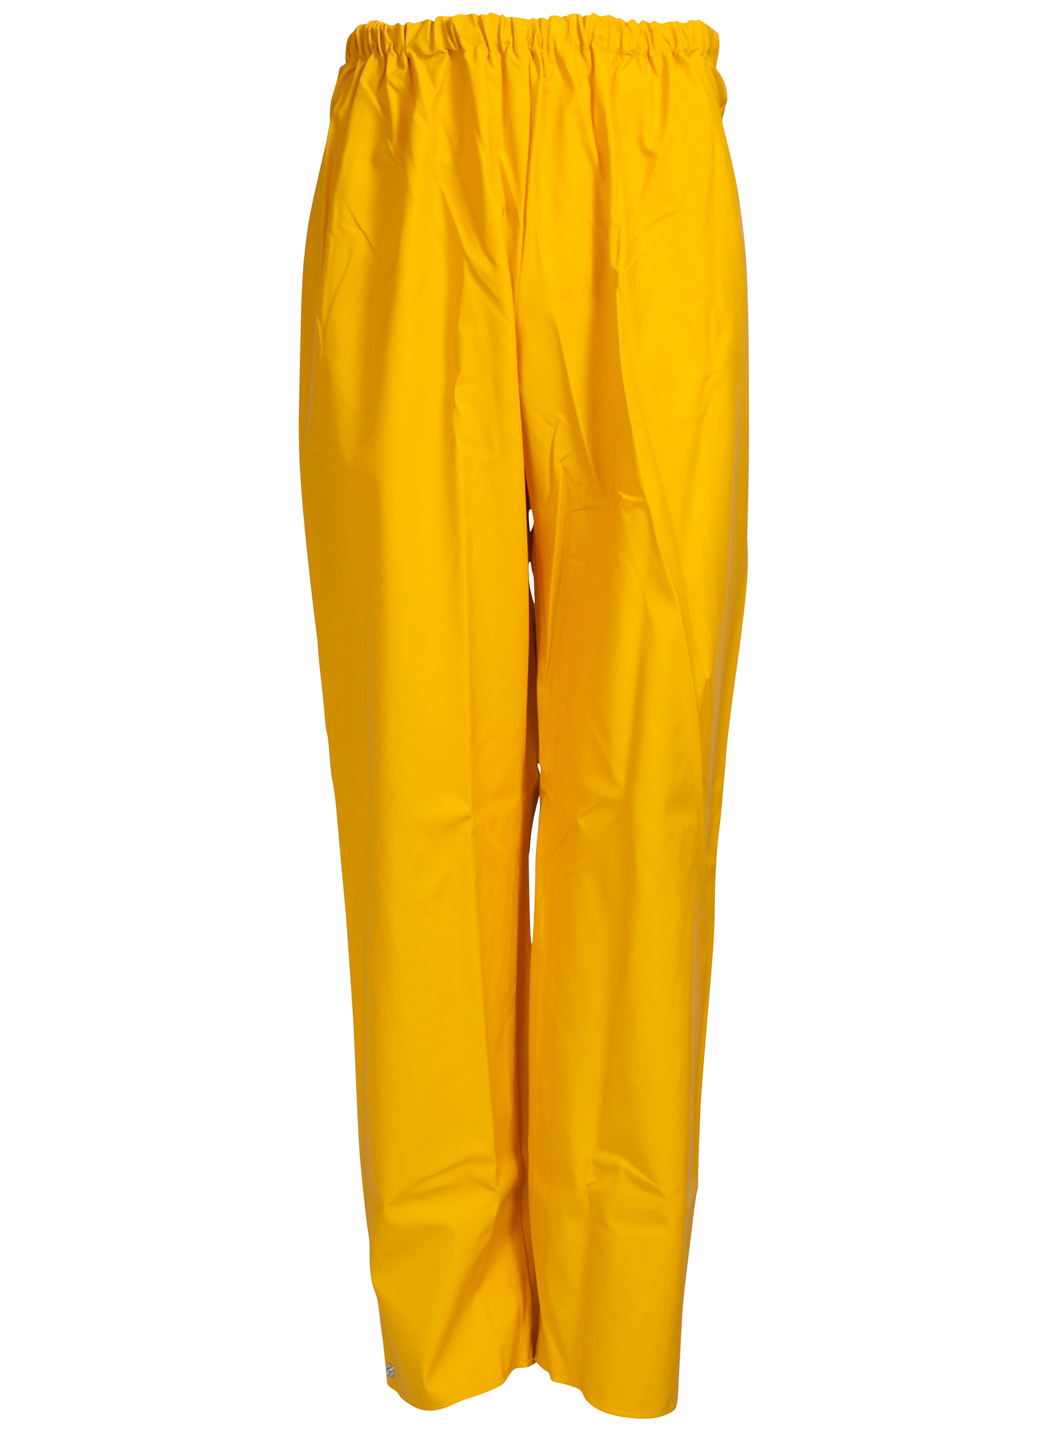 ELKA-Rainwear, PVC LIGHT Bundhose, 320g/m², gelb